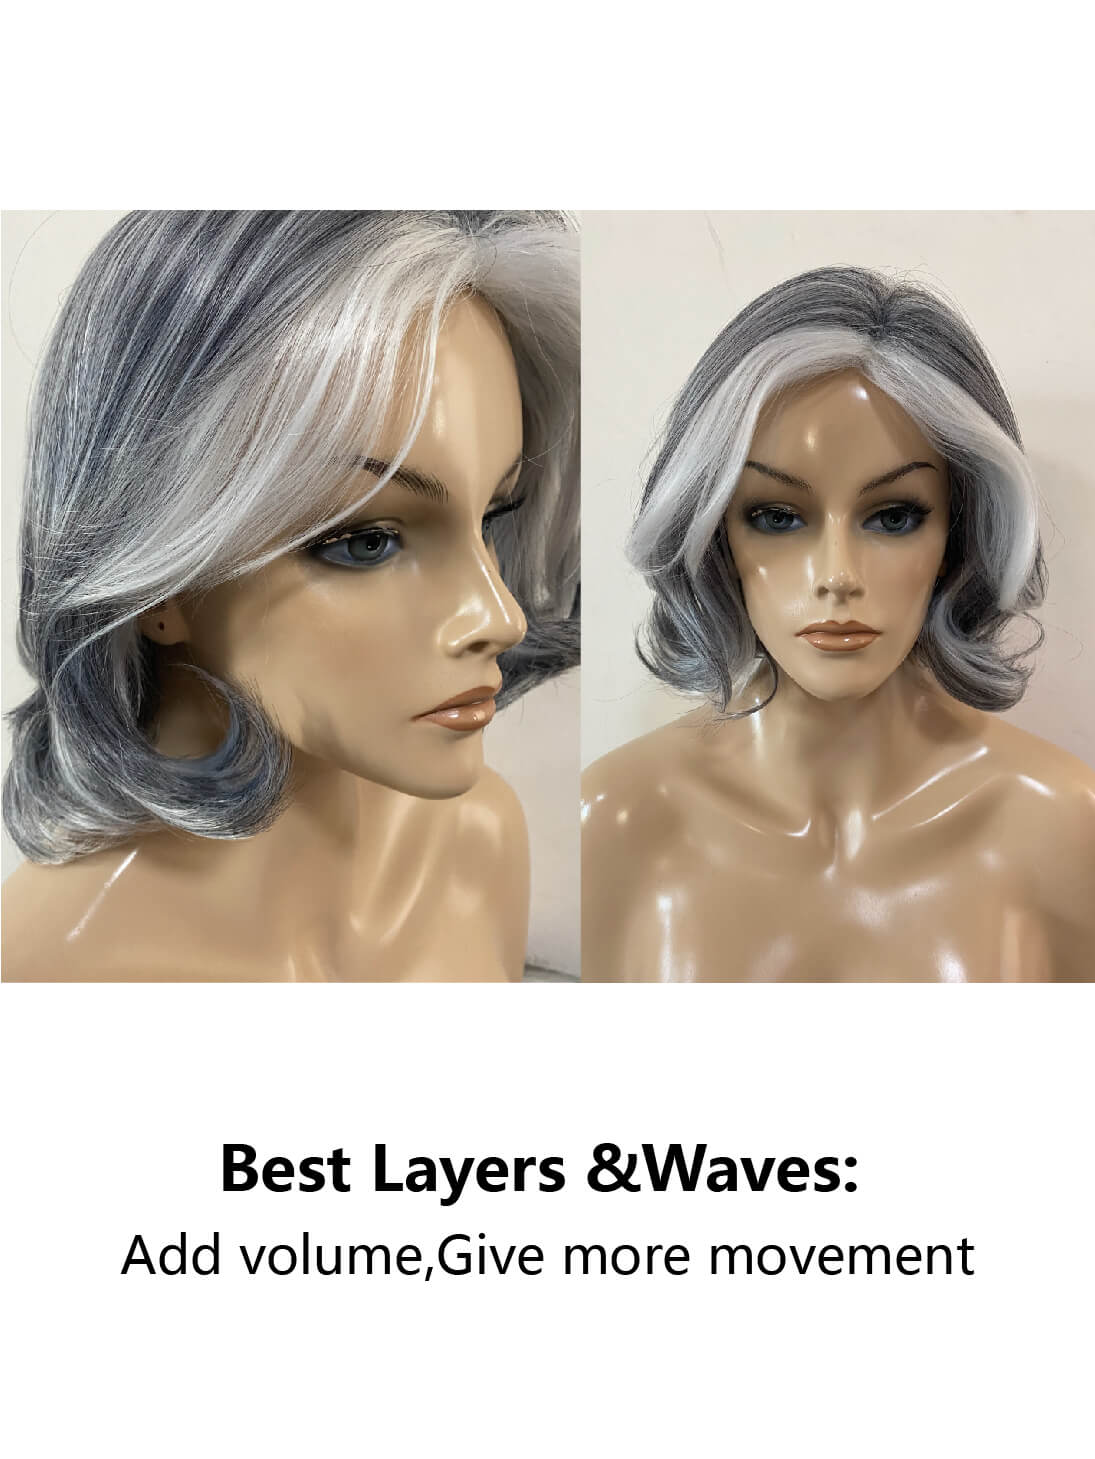 Medium Bob Mixed GrayWigs  Synthetic Wig By imwigs®